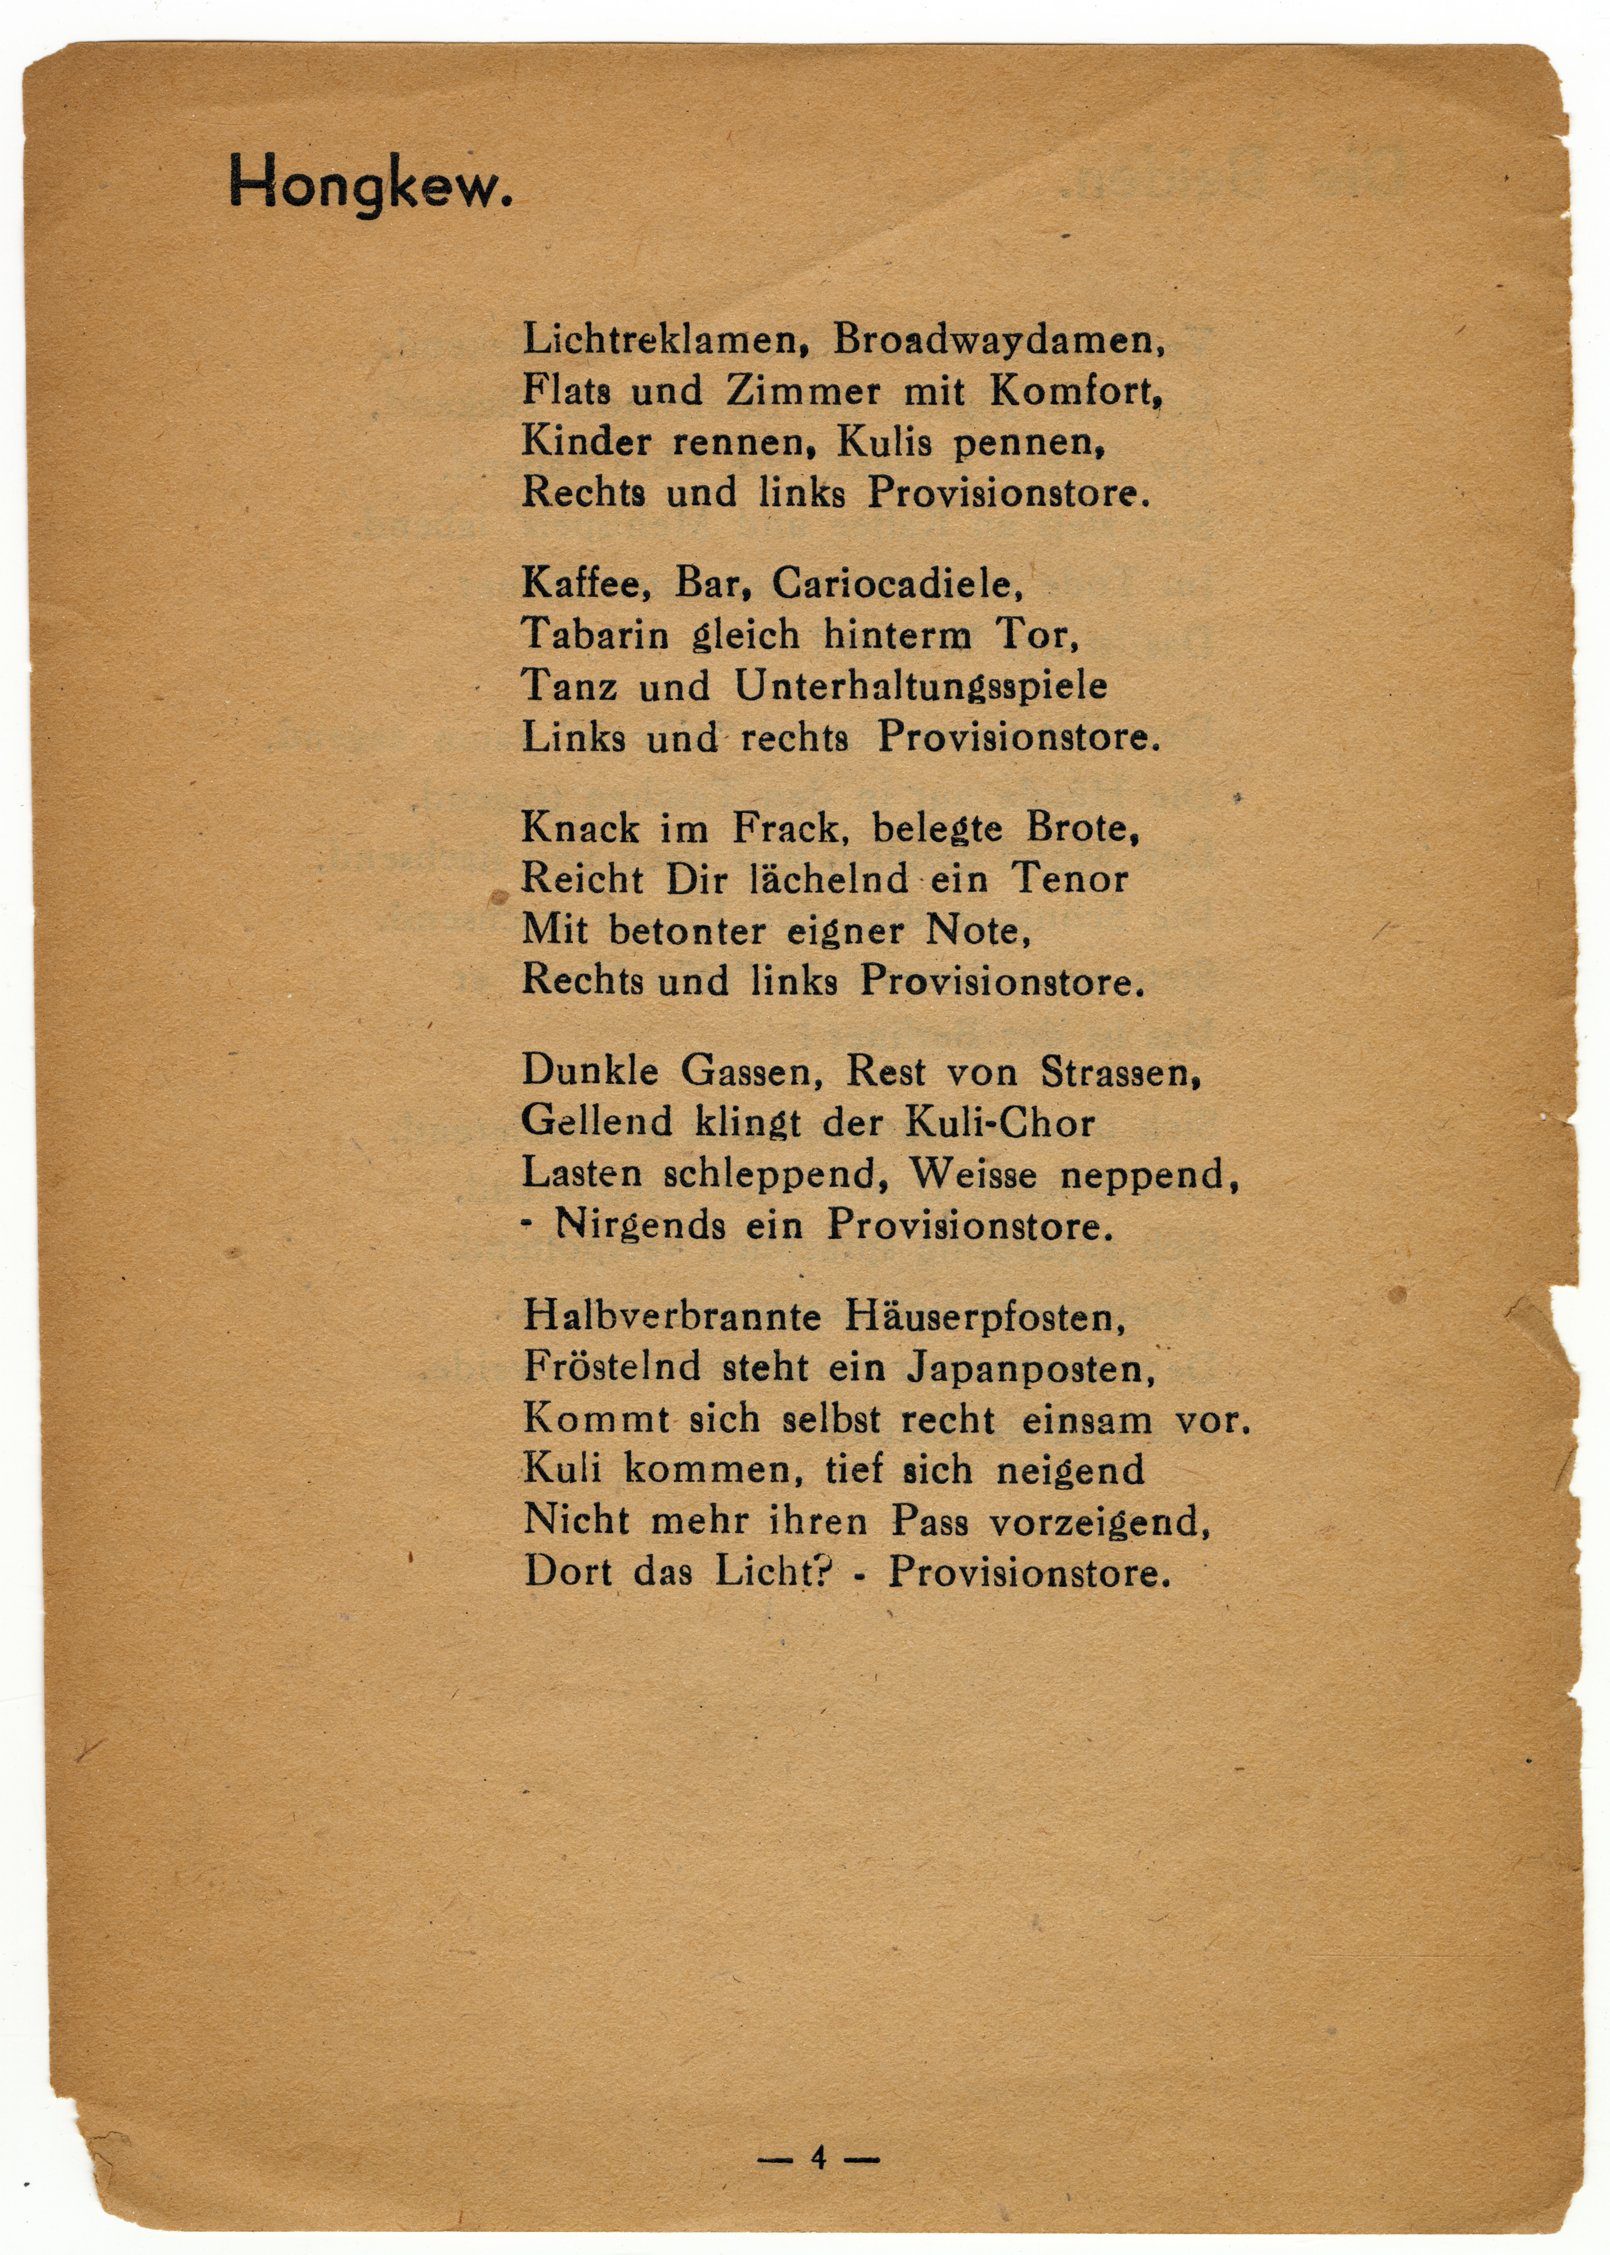 A German poem entitled "Hongkew."